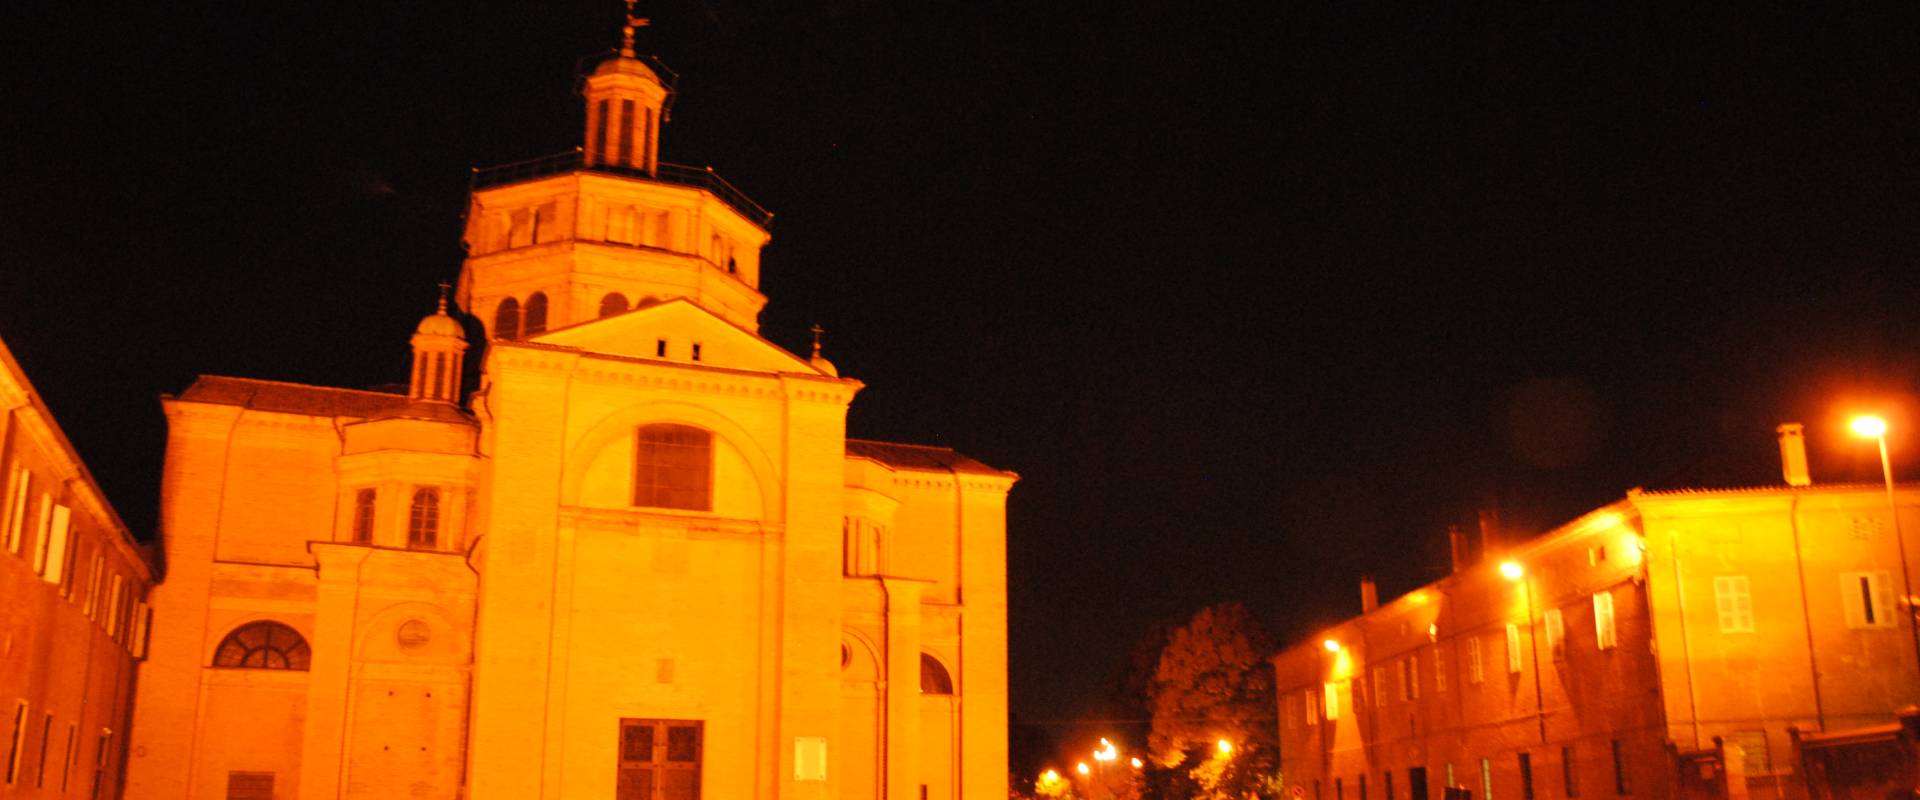 Chiesa di Santa Maria di Campagna notte foto di Phabius